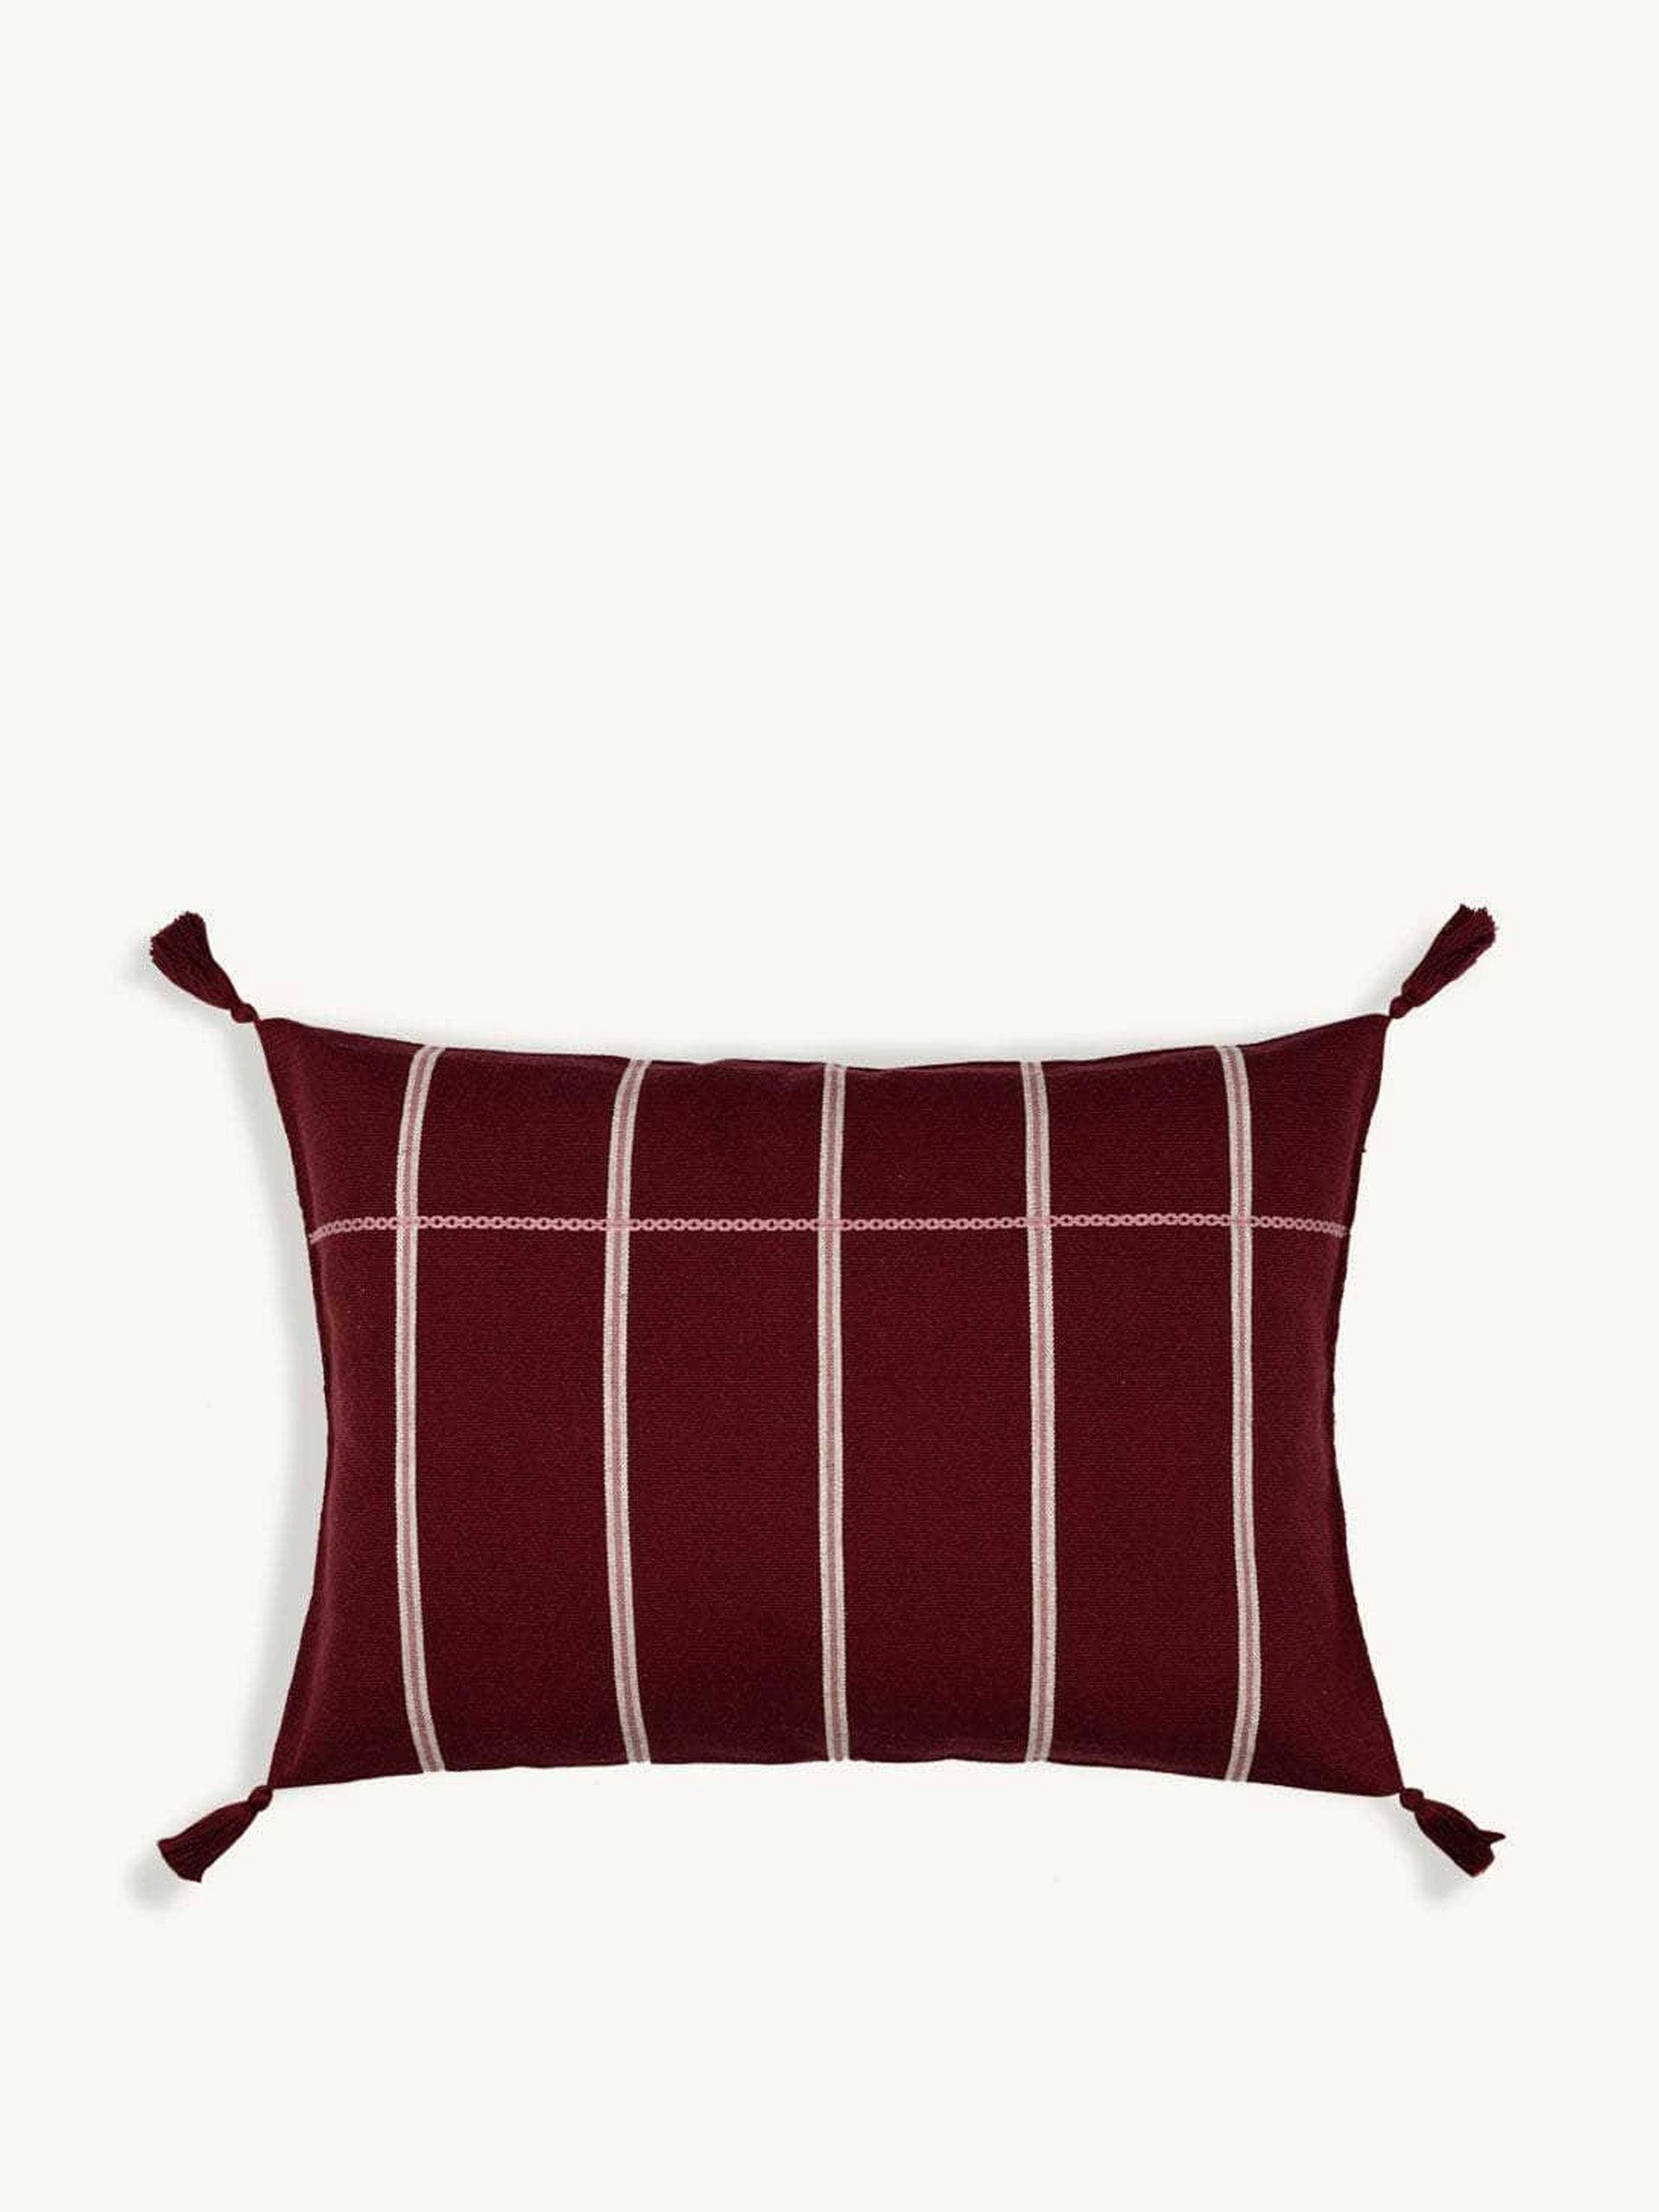 Rayas stripe Zinacantan handwoven cushion cover